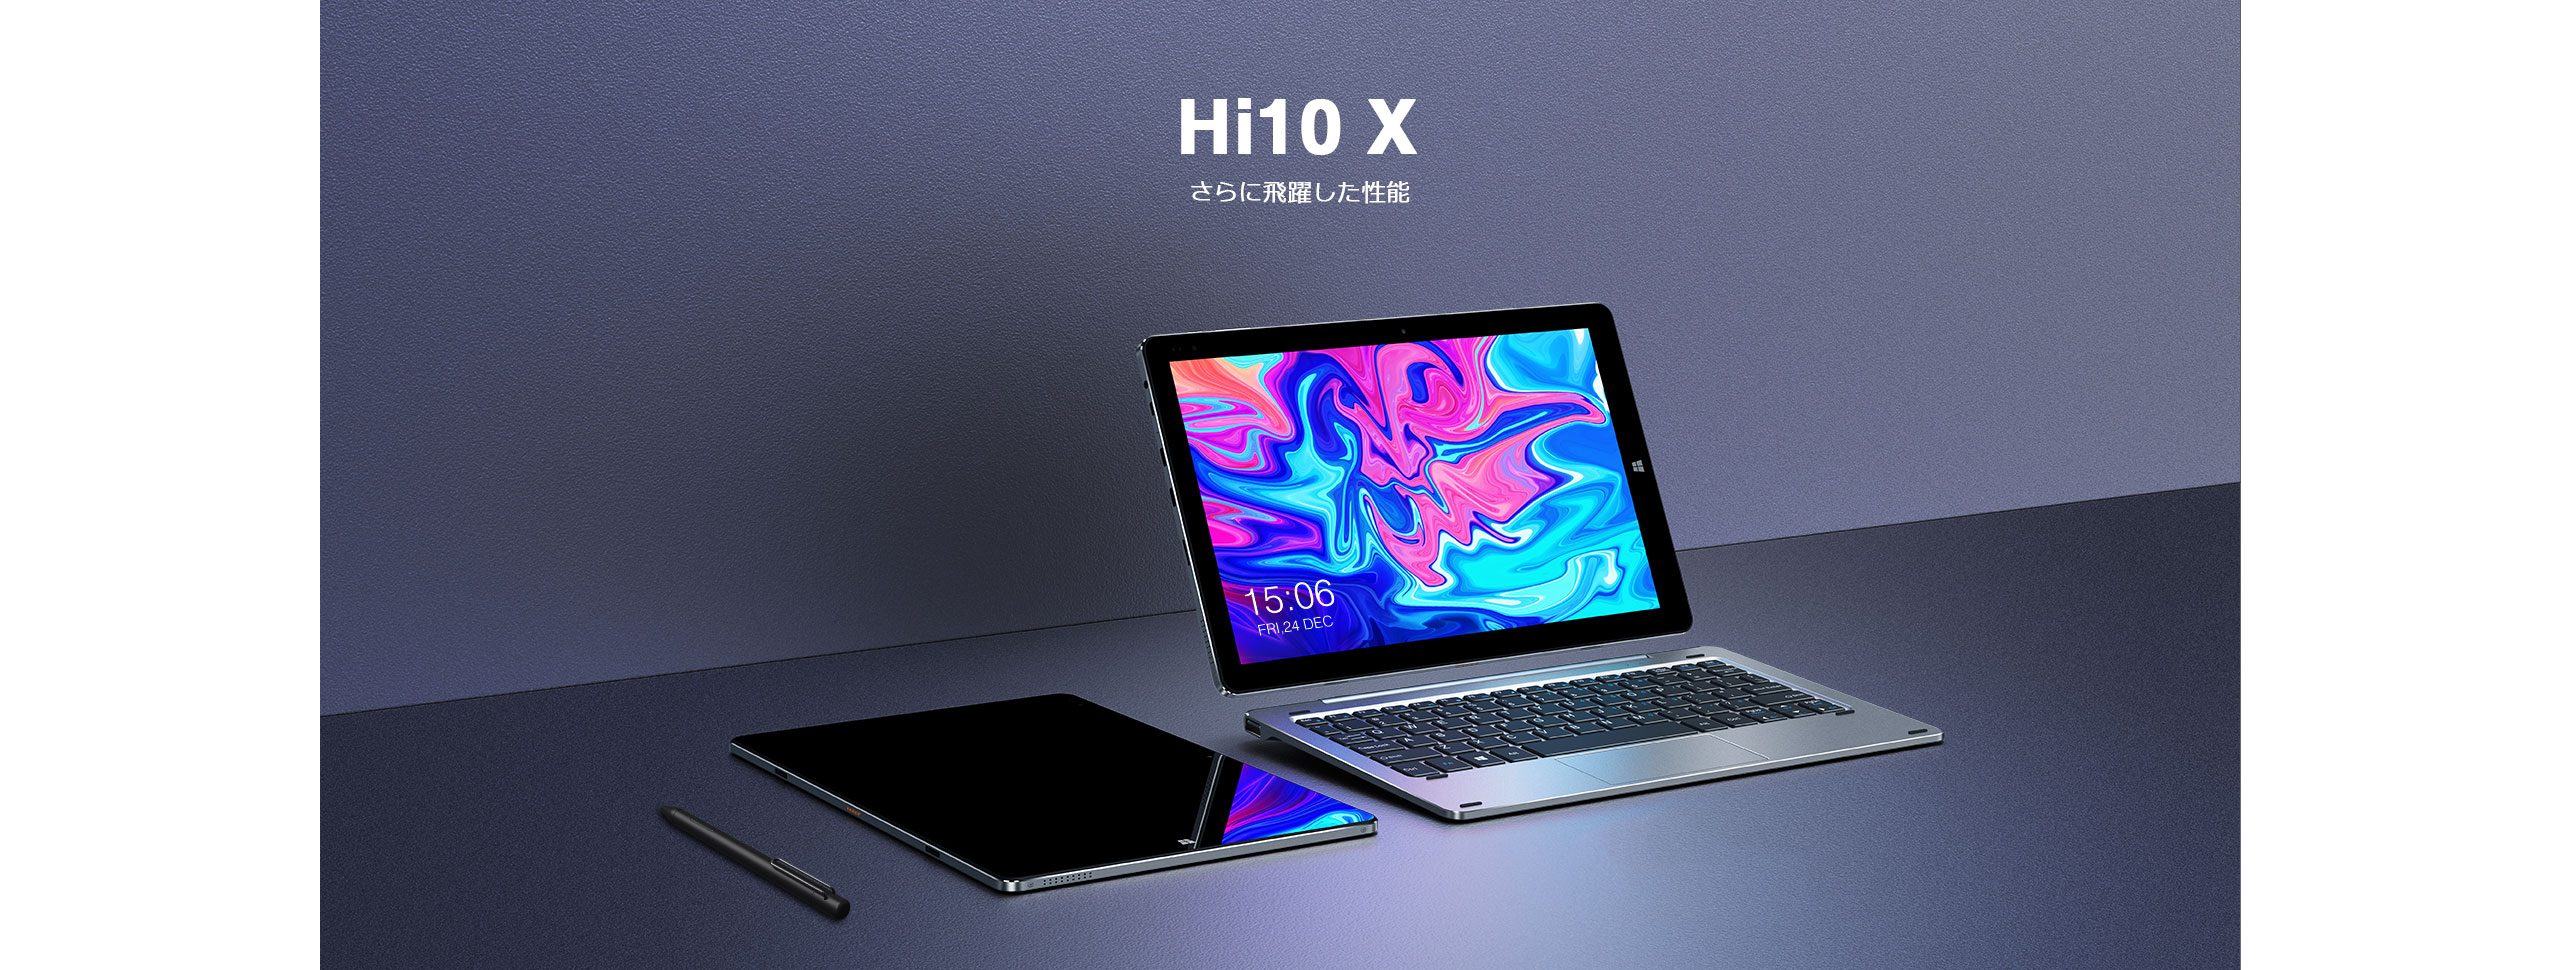 Hi10 X-タブレット-カテゴリー-Chuwi（ツーウェイ） 公式サイト